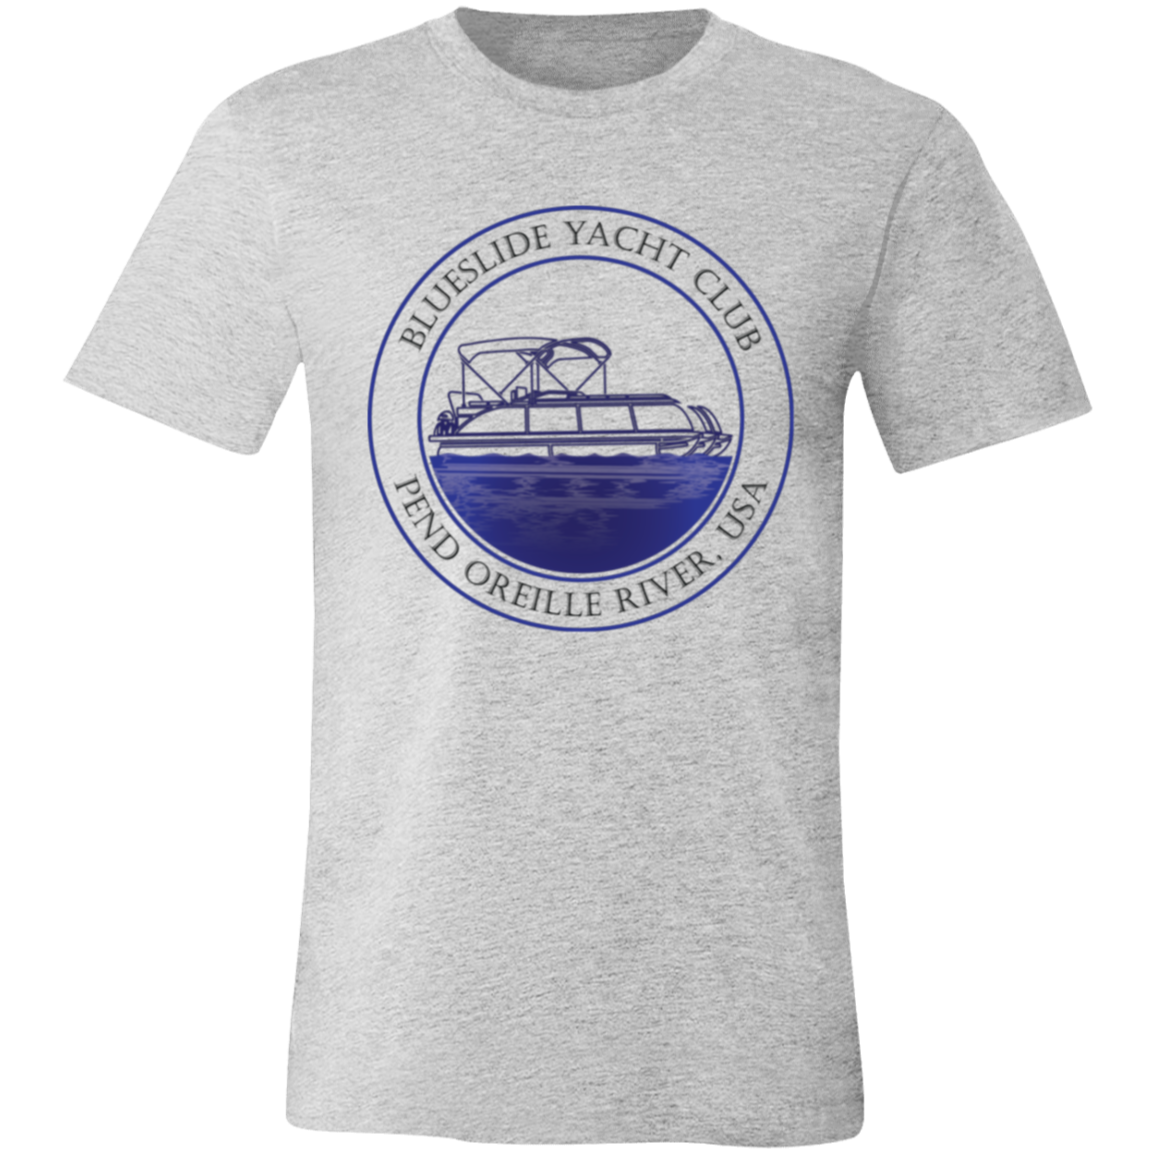 Blueslide Yacht Club - Shirt